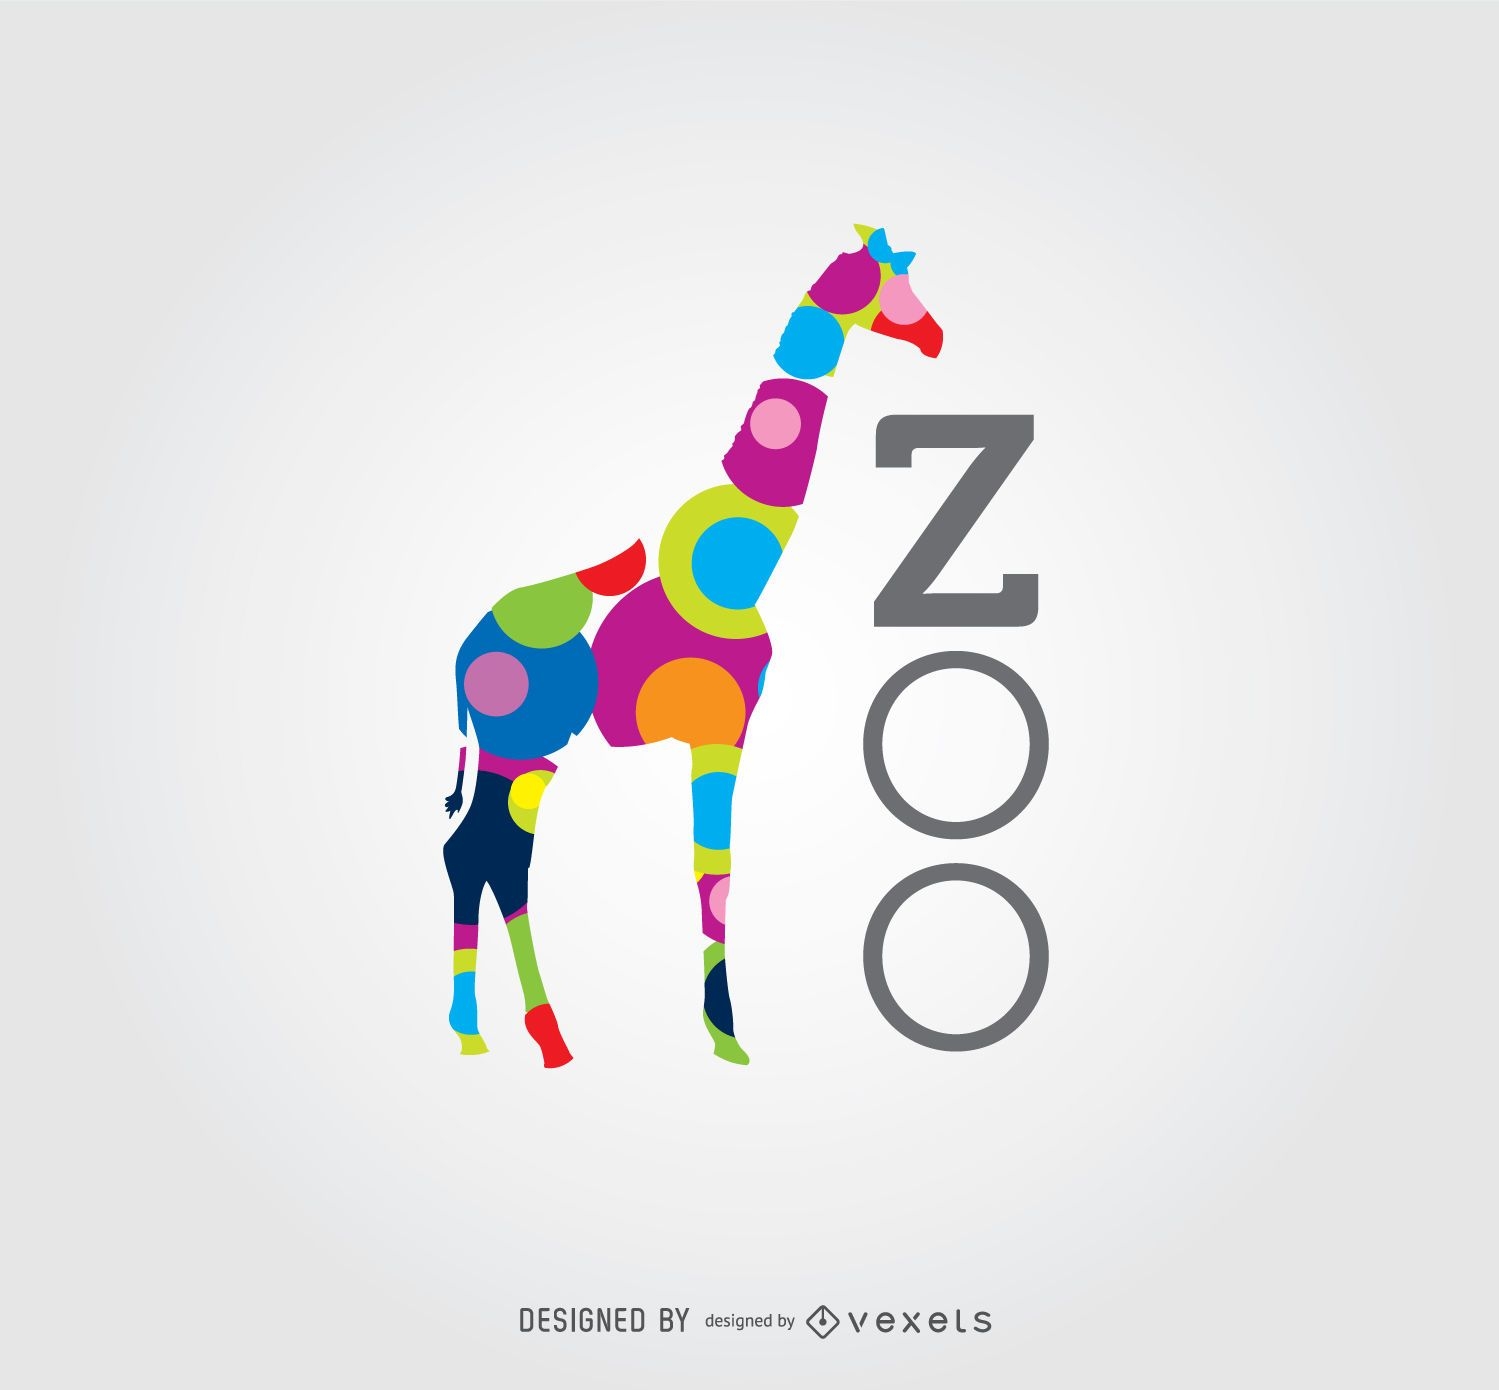 Colorful and Playful Illustrative Animal Zoo Logo Template - MasterBundles